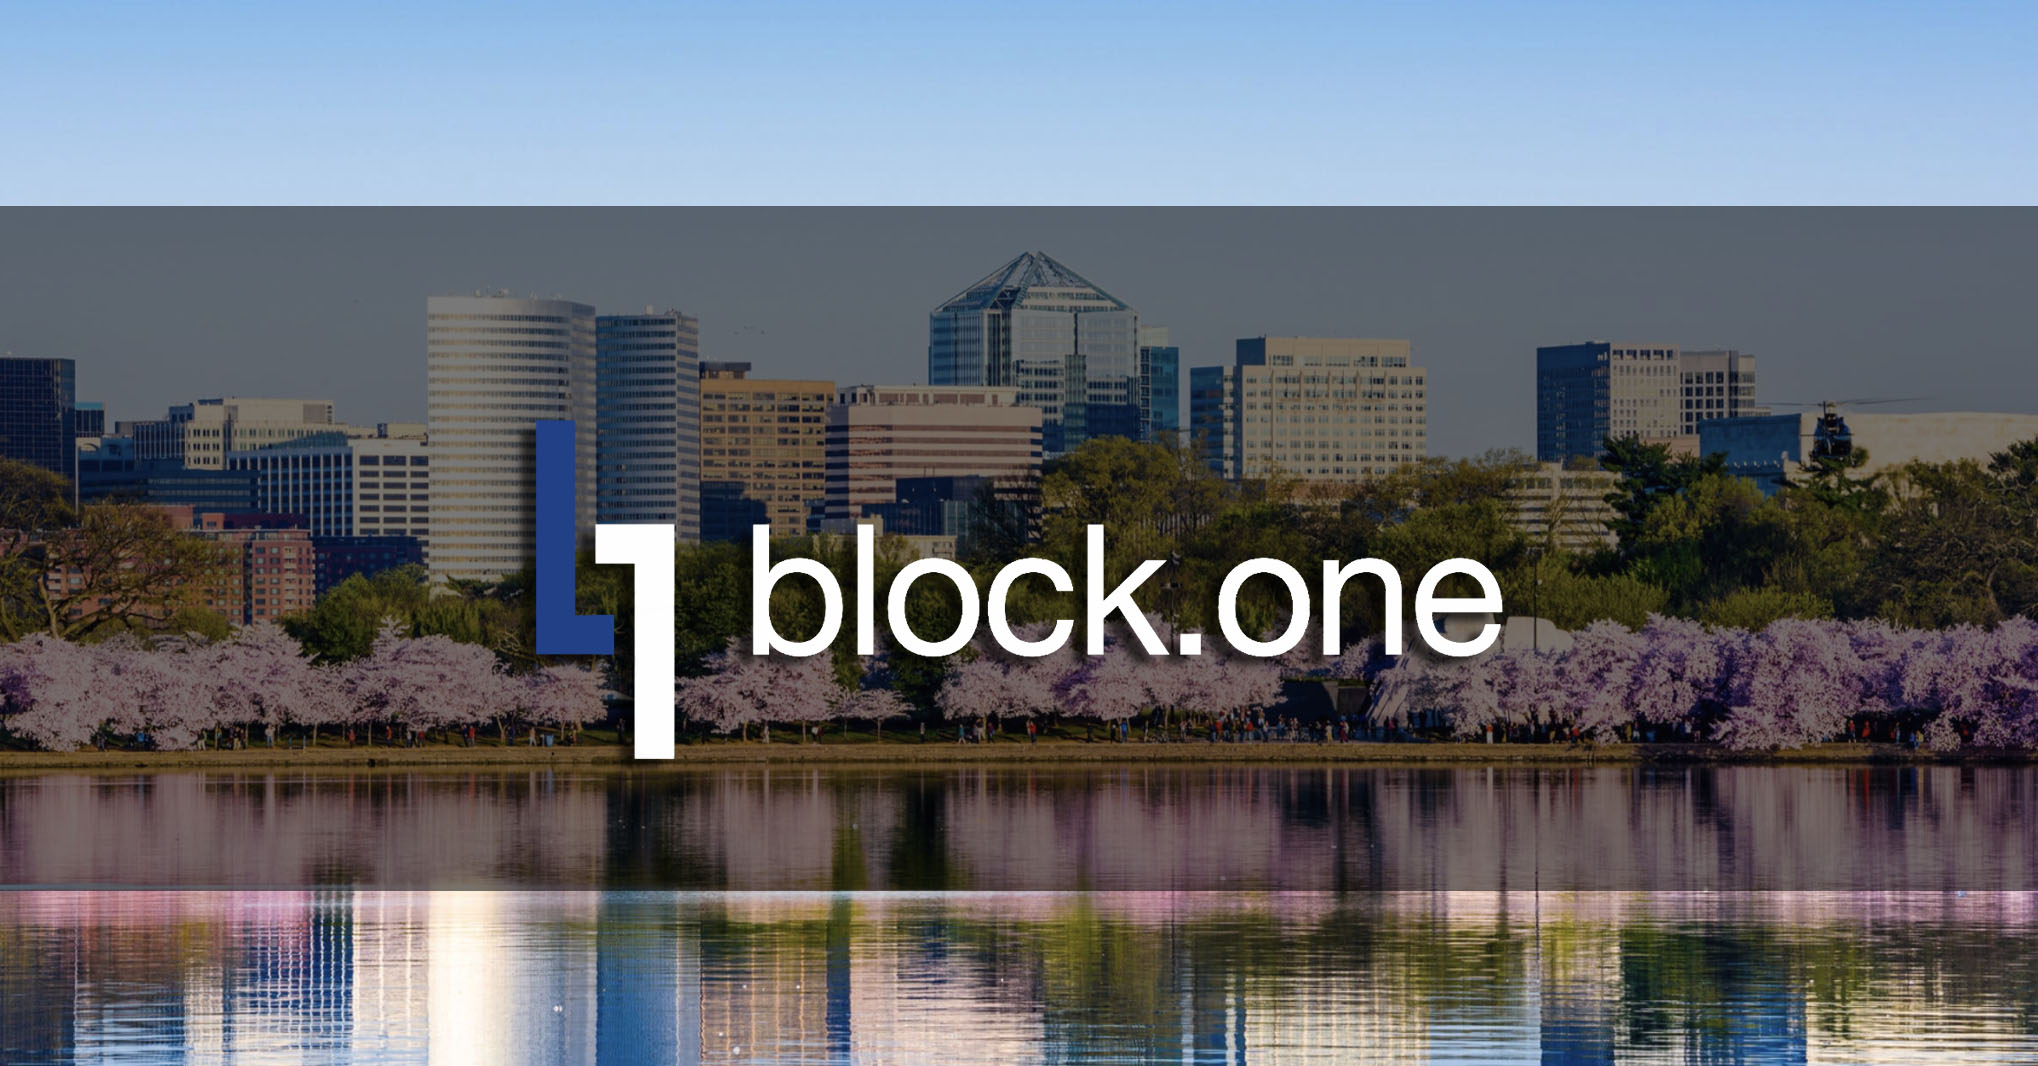 Block.One invest $10 million to establish new U.S headquarters